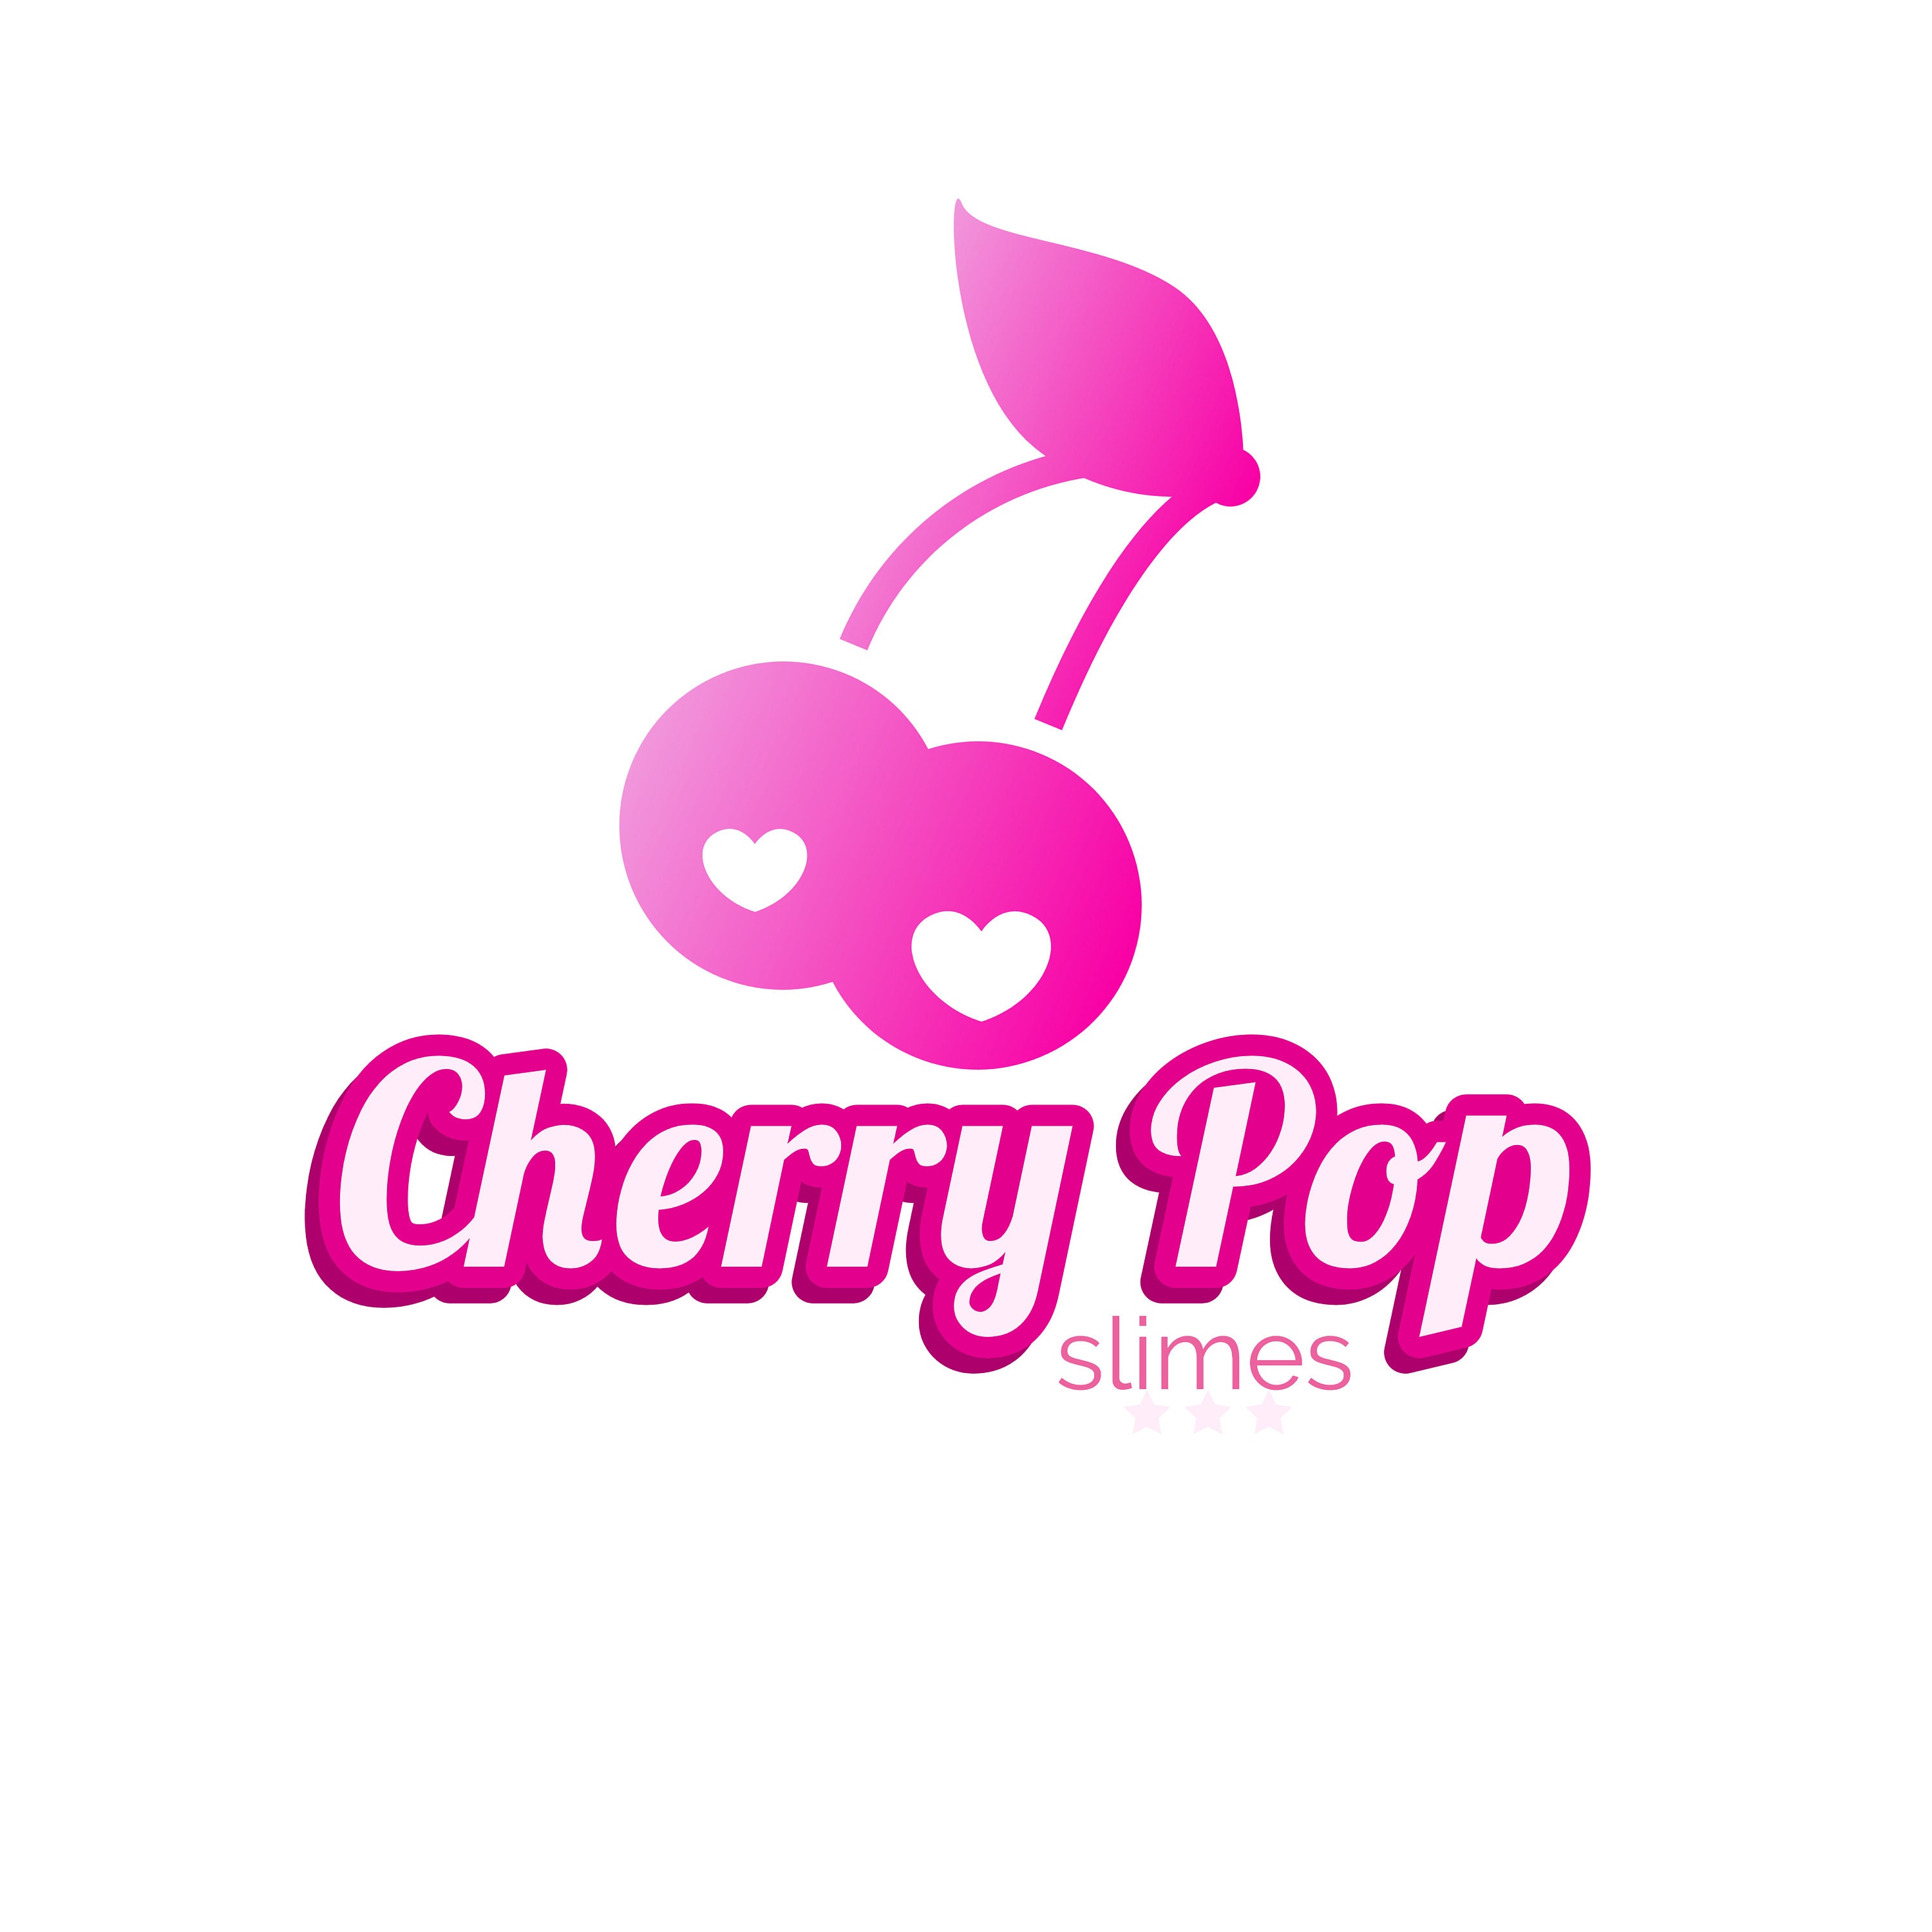 Cherry Pop Slimes by CherryPopSlimess.